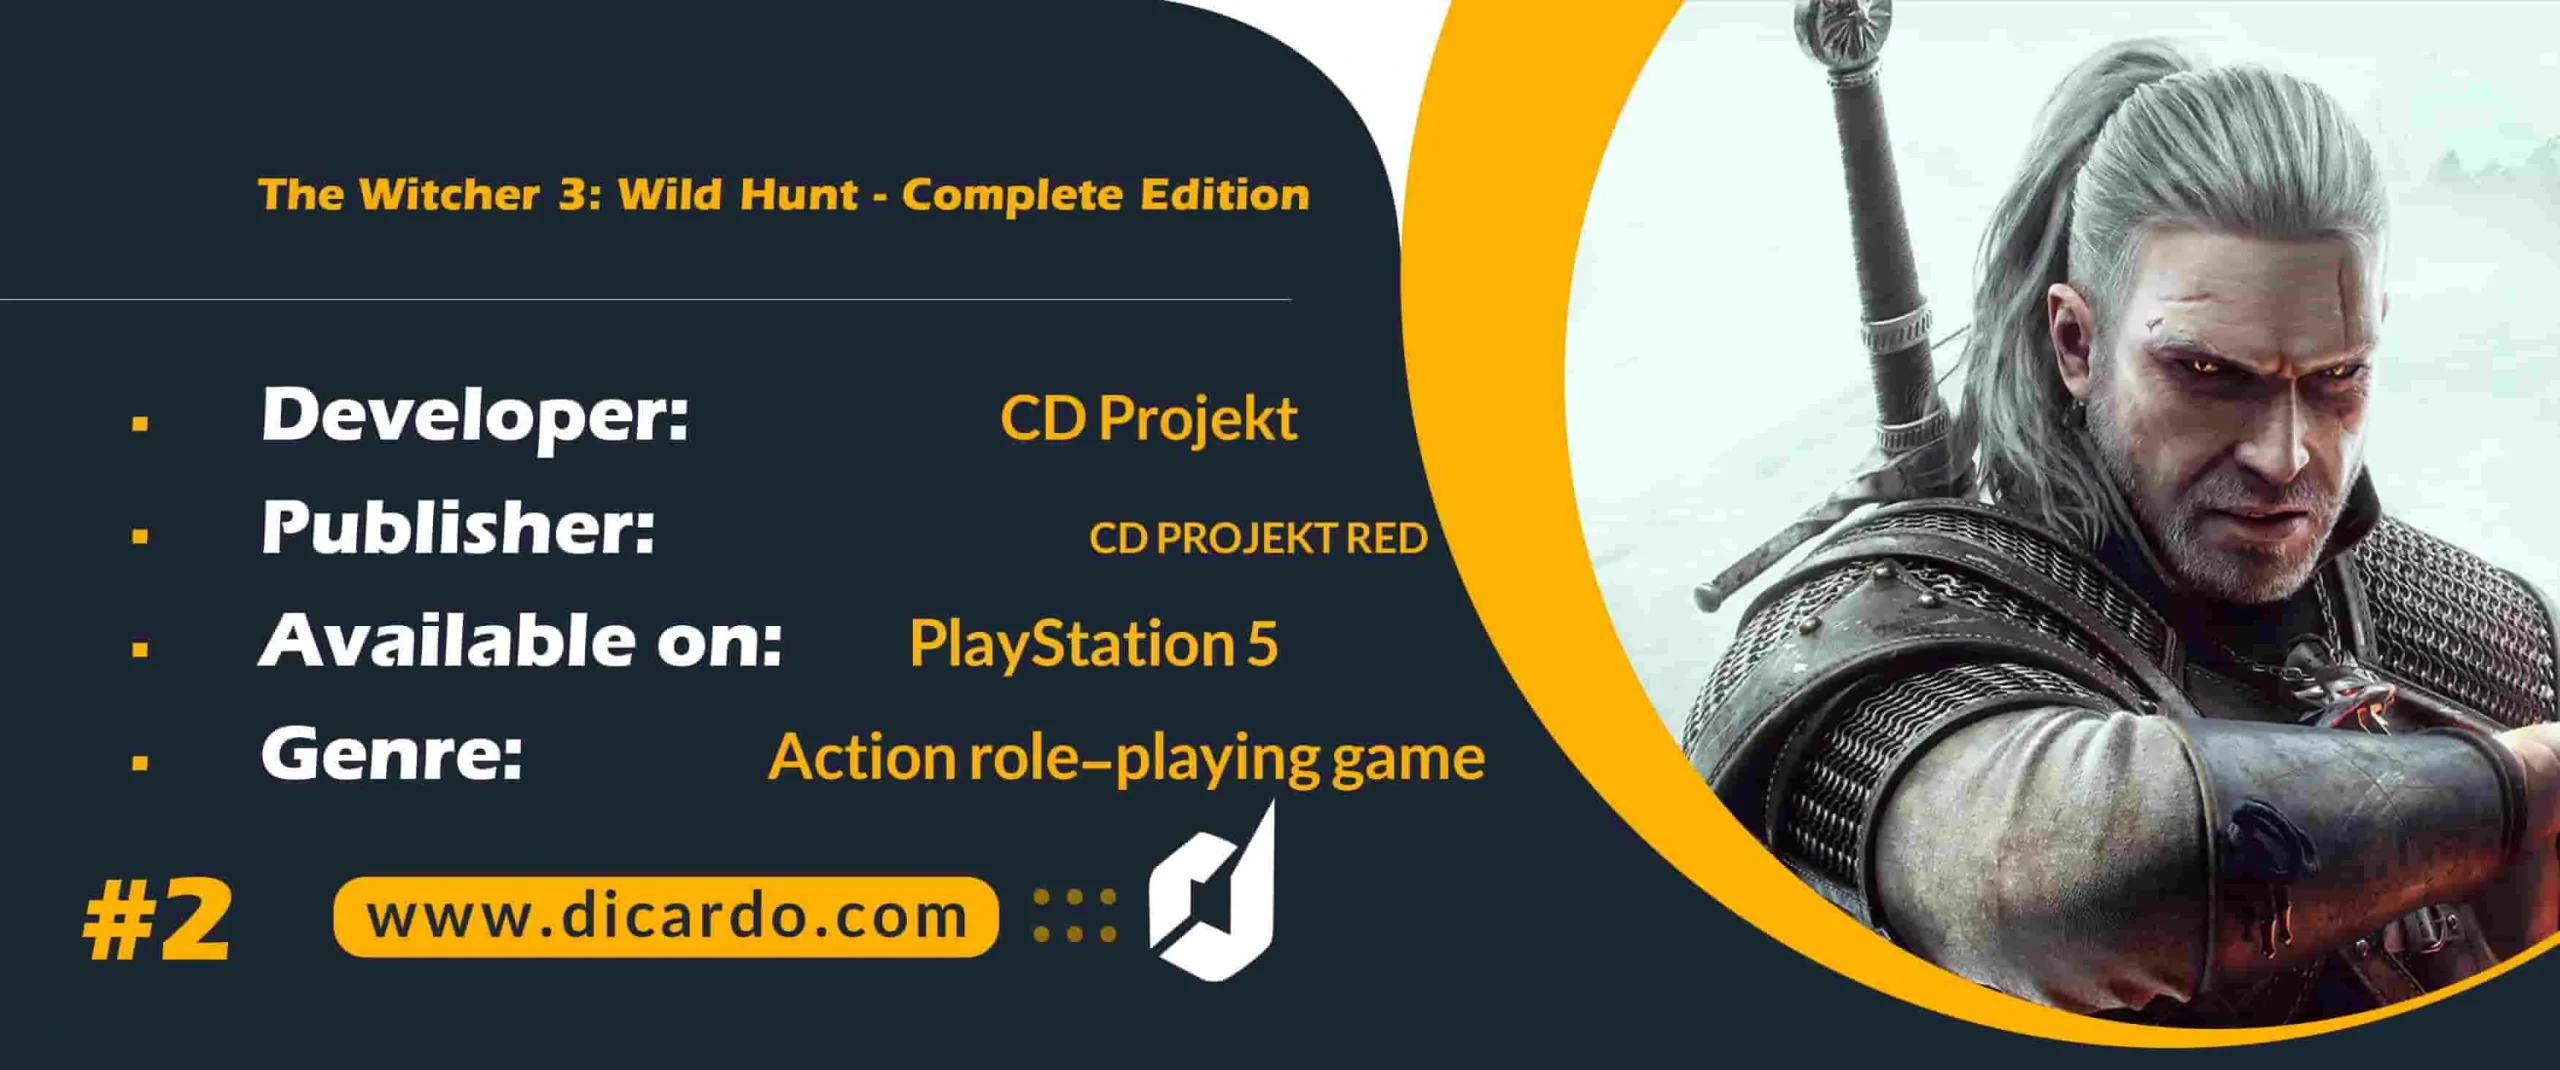 #2 د ویچر3 واید هانت کامپلت ادیشن The Witcher 3: Wild Hunt - Complete Edition